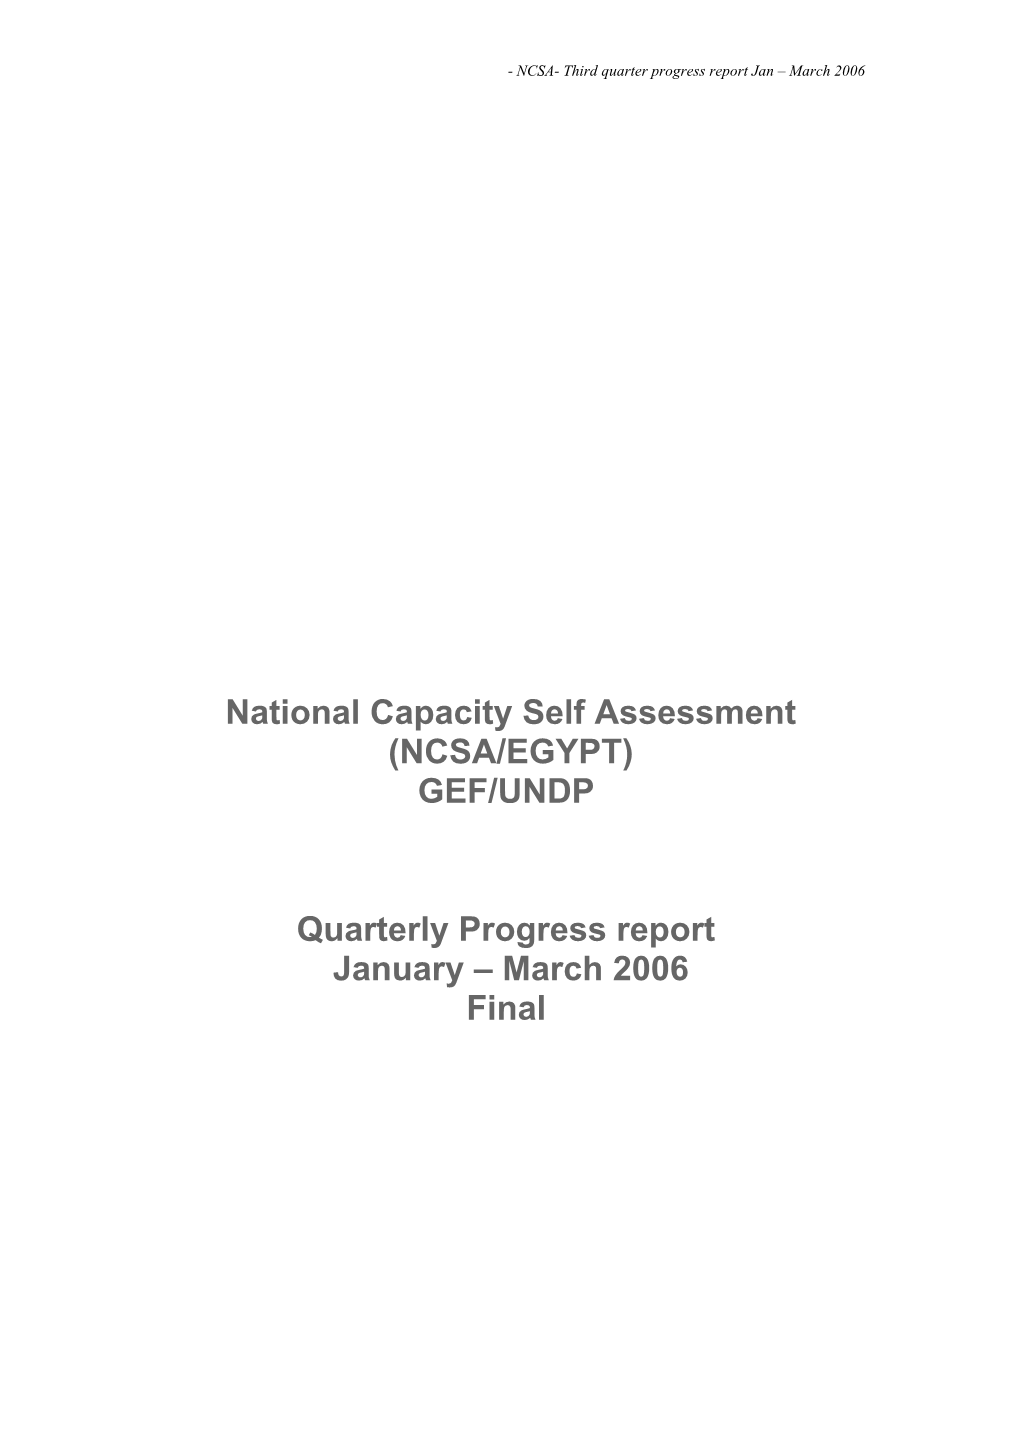 National Capacity Self Assessment (NCSA/EGYPT)